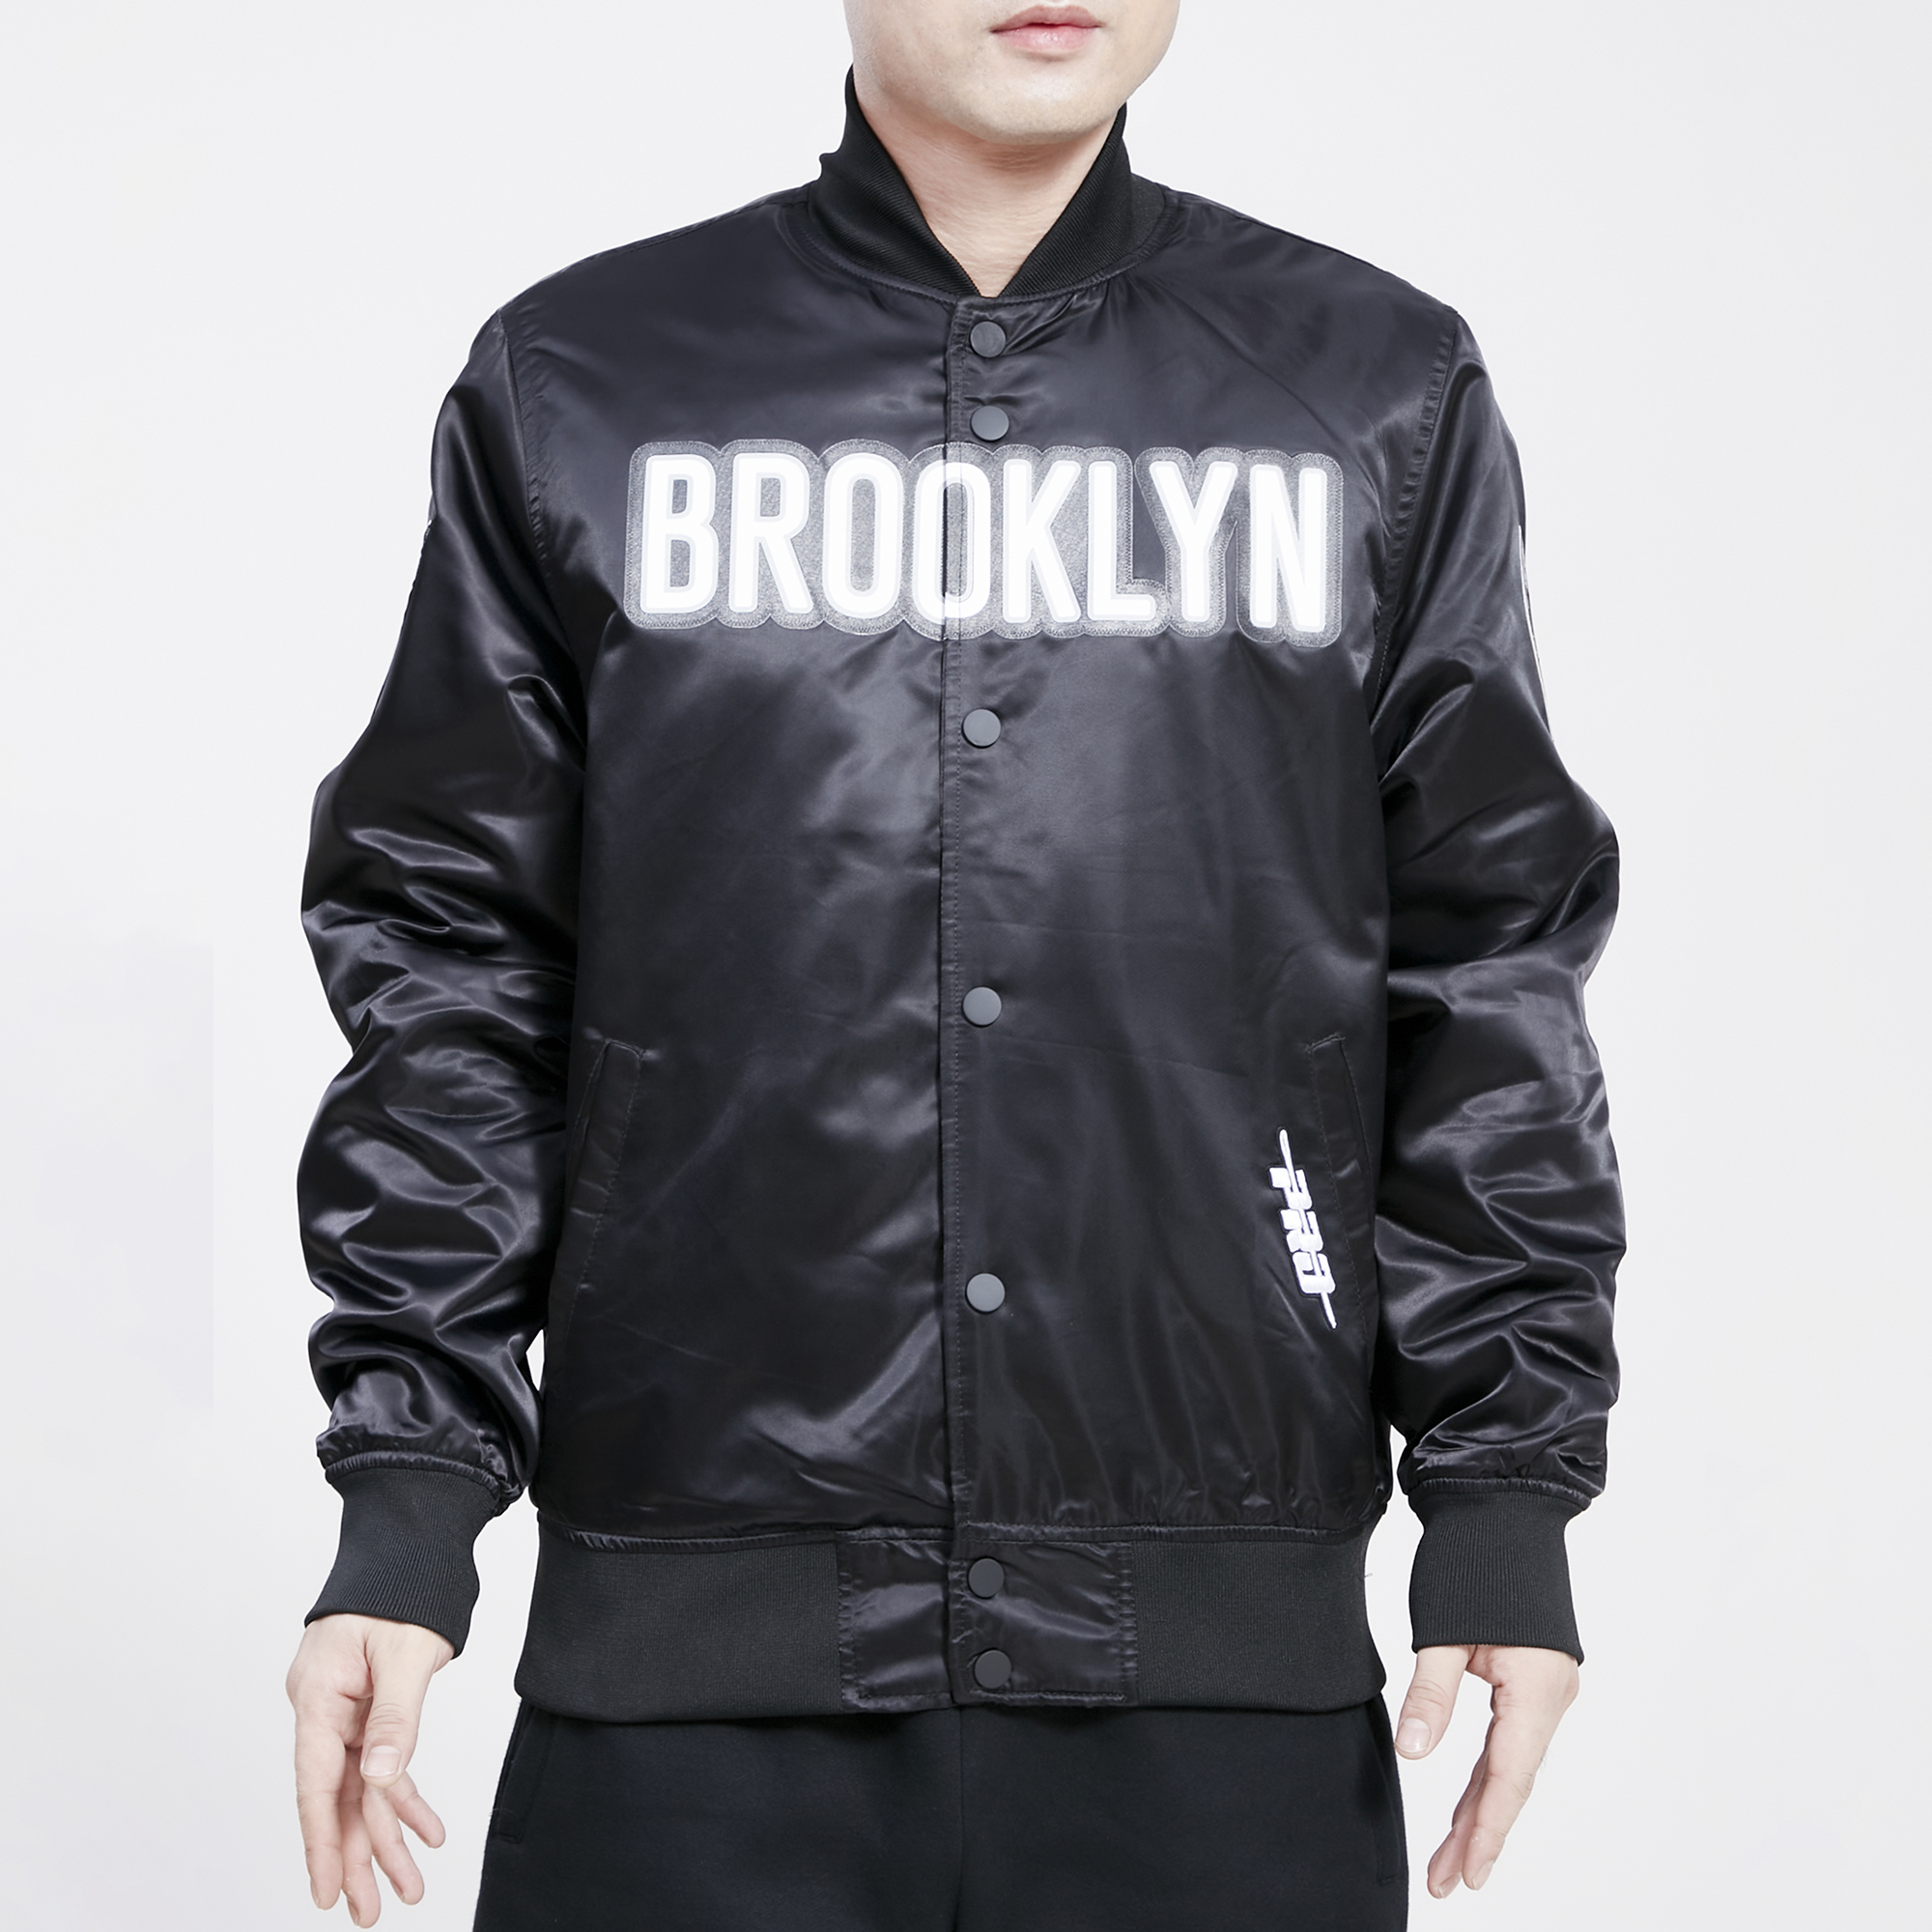 Shop Pro Standard Brooklyn Nets Big Logo Satin Jacket BBN652887